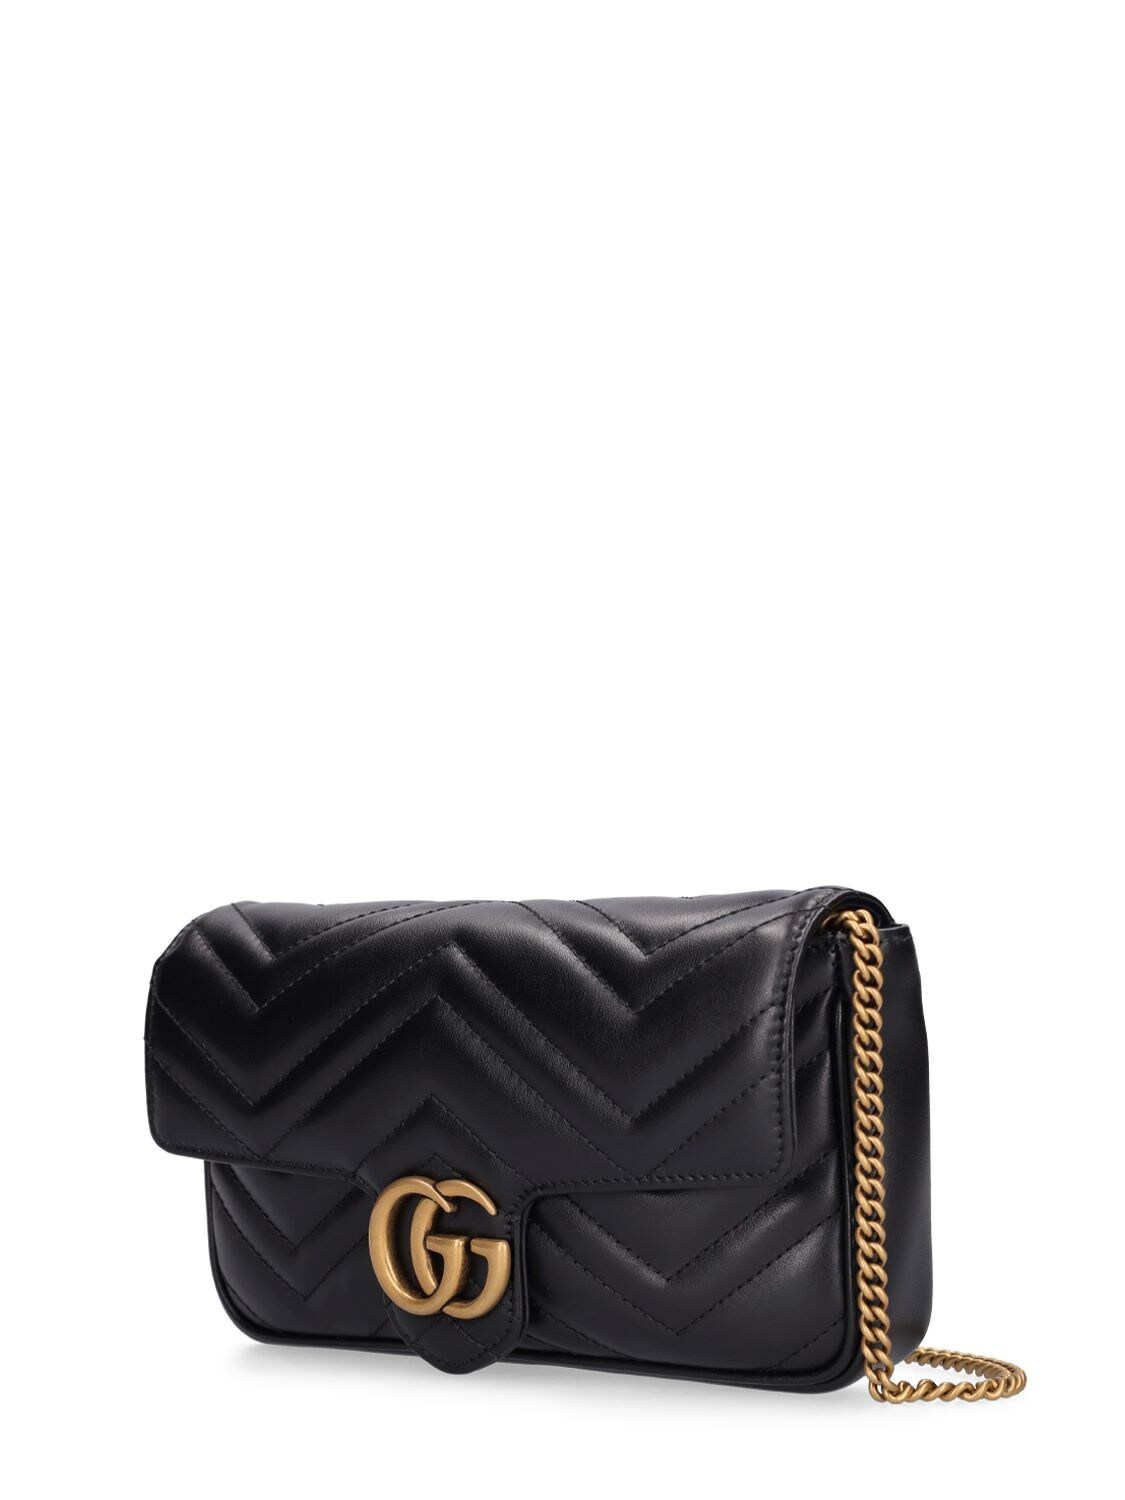 GG Marmont Leather Shoulder Bag in Black - Gucci